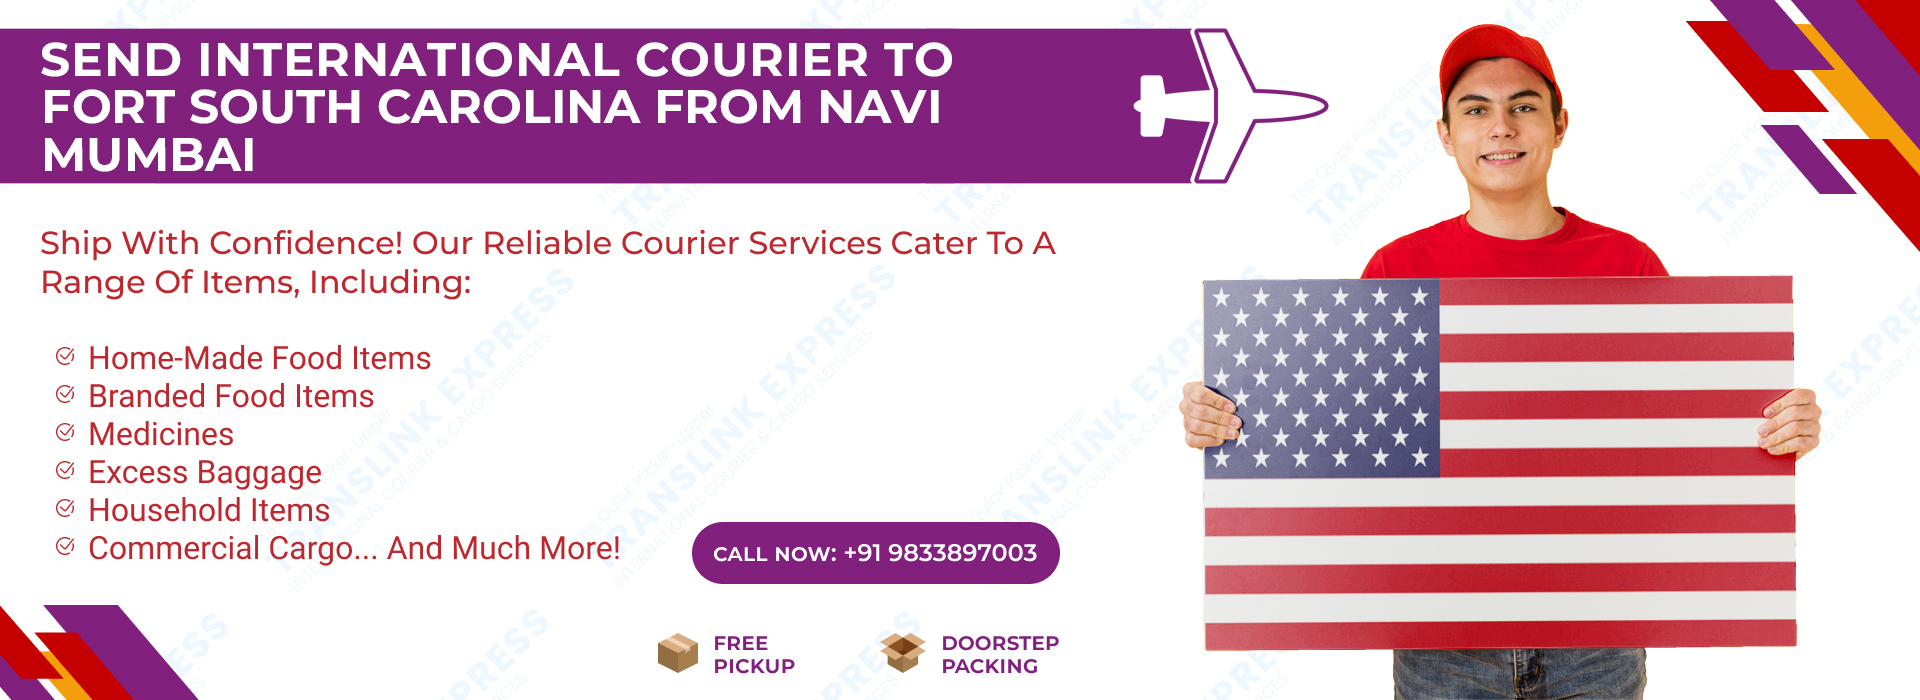 Courier to Fort South Carolina From Navi Mumbai